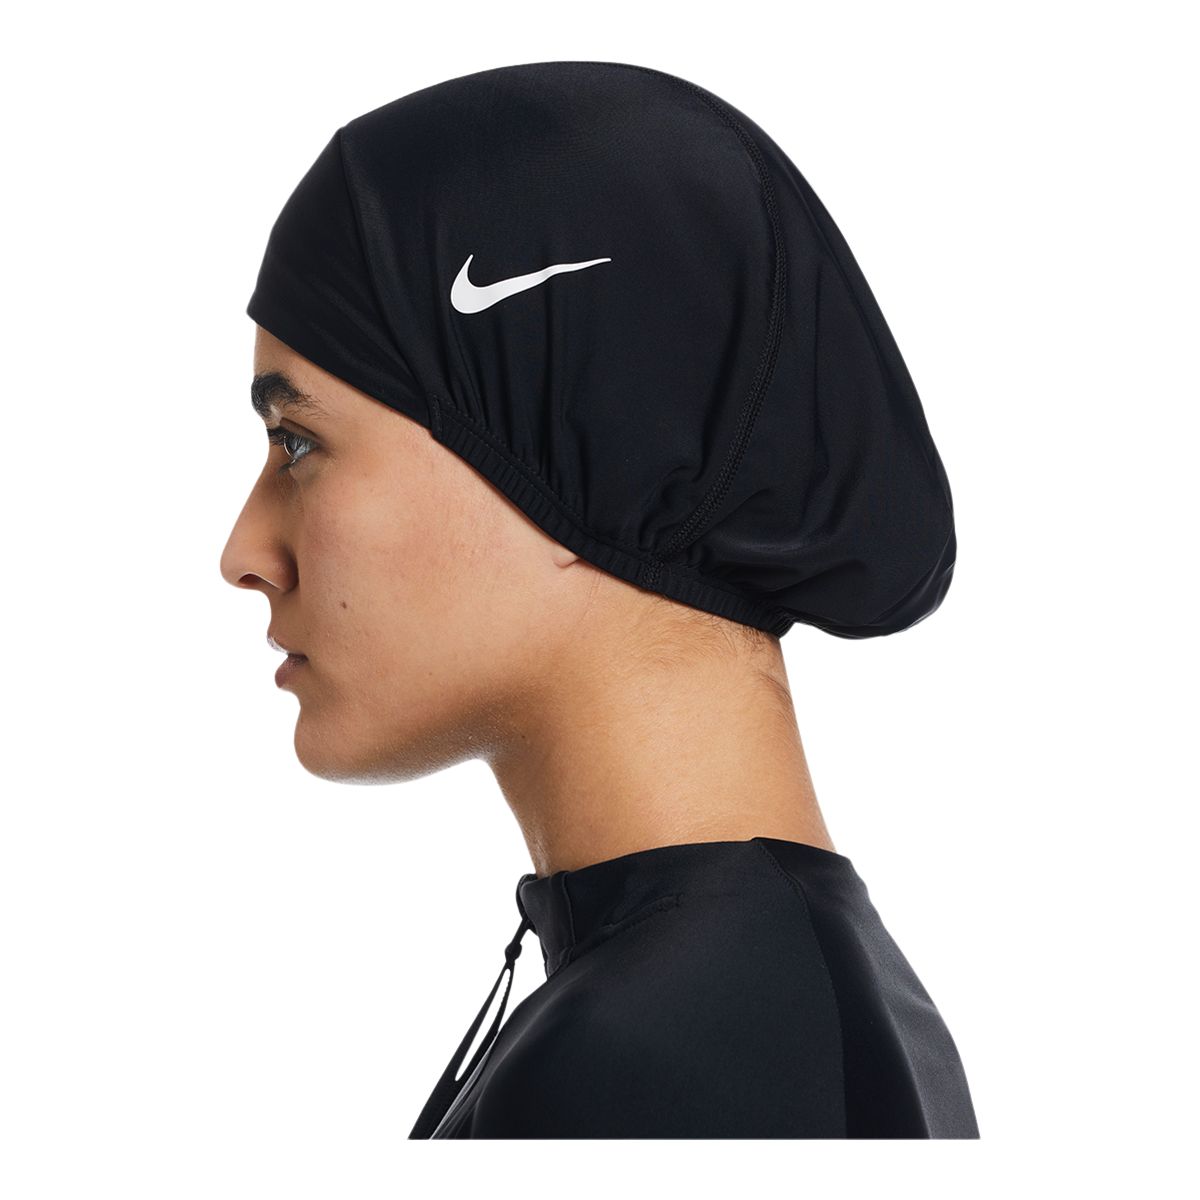 Nike Women's Victory Swim Head Cover